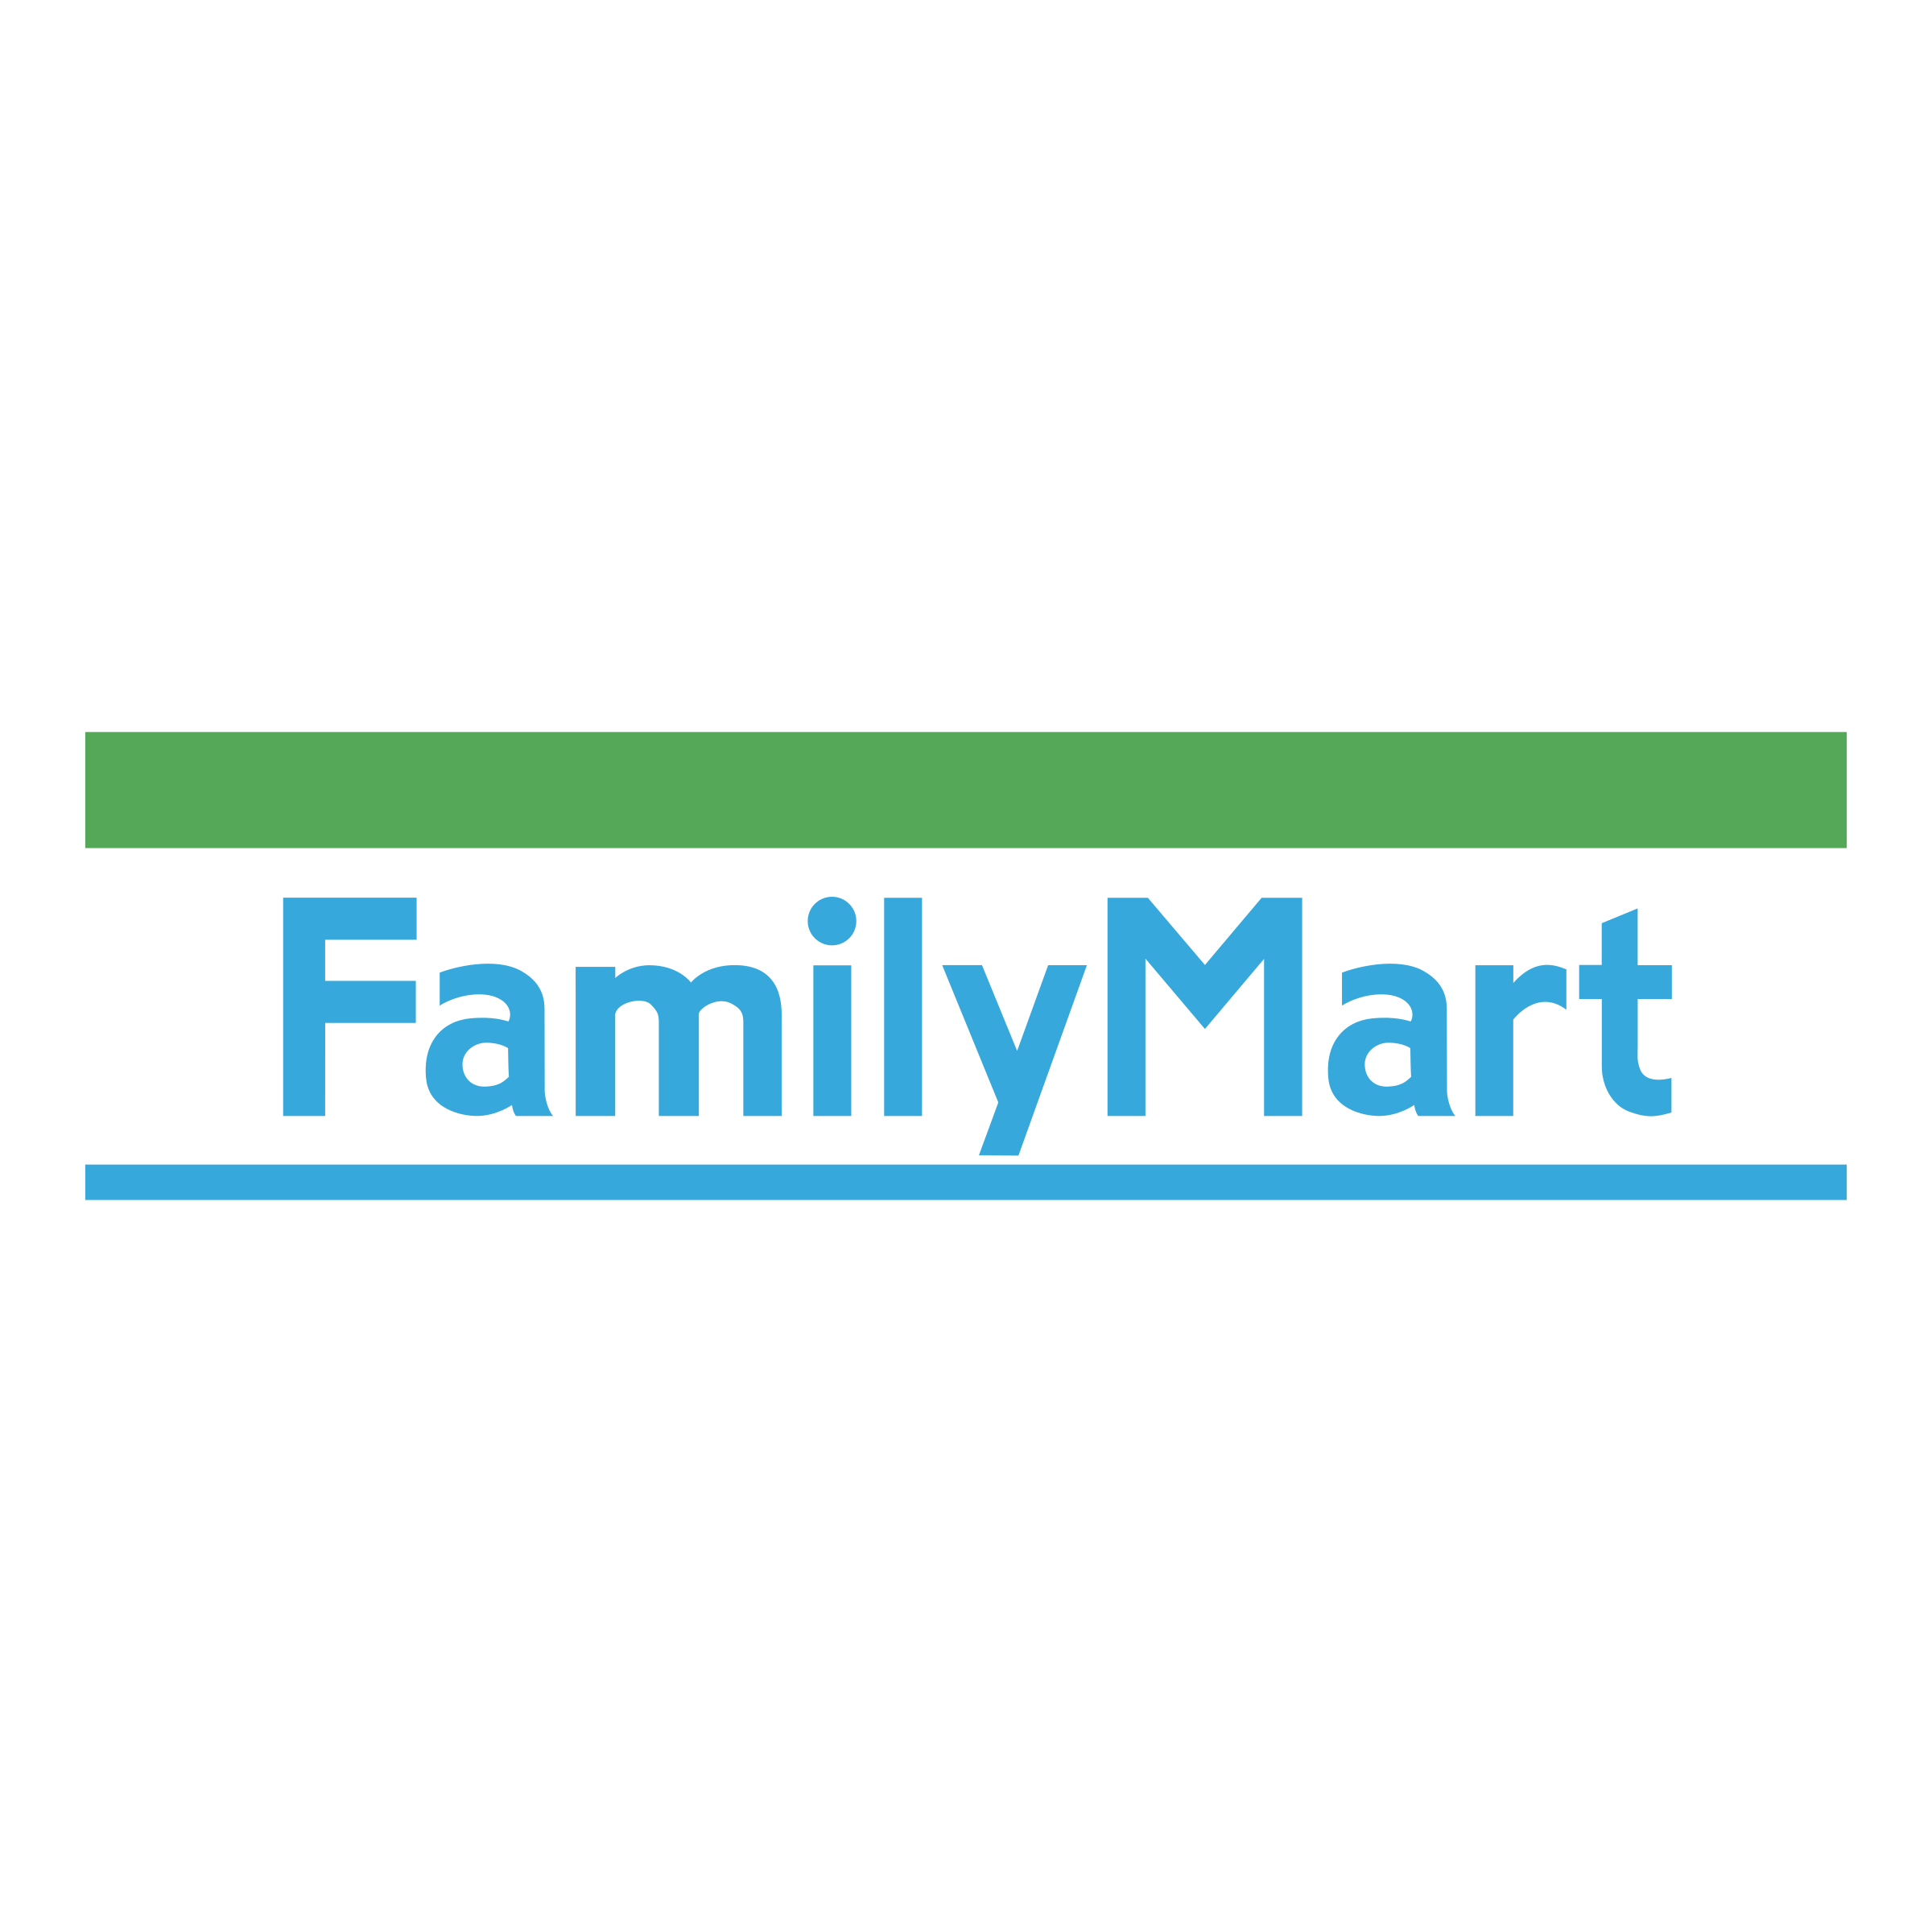 Familymart Logo - FamilyMart Logo PNG Transparent & SVG Vector